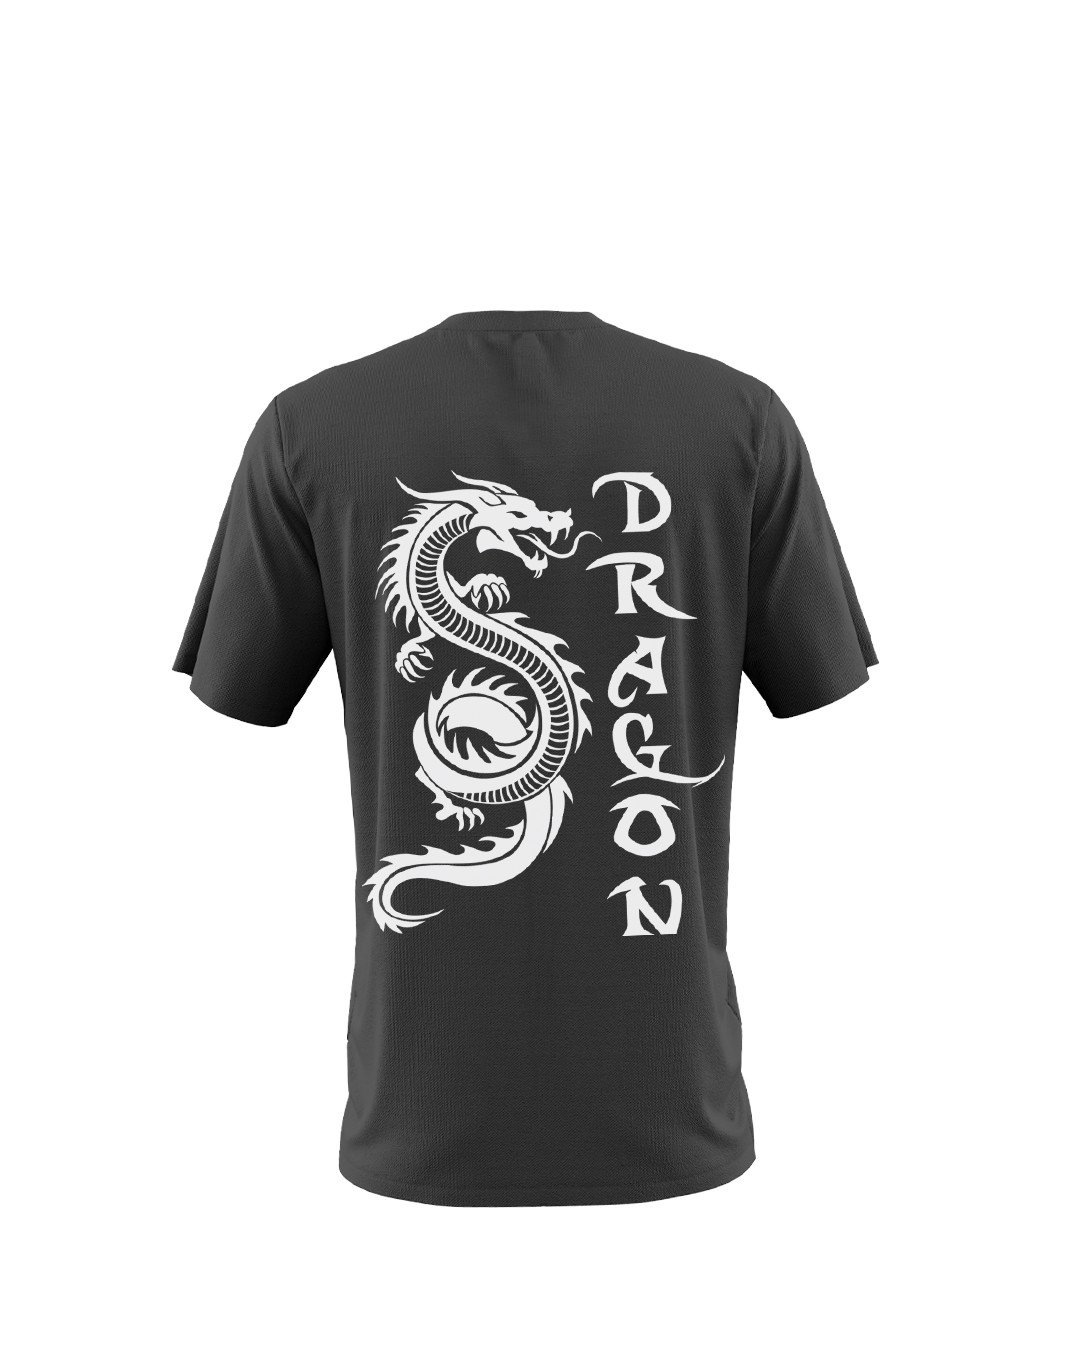 TeesWarrior Dragon Silver Graphic Printed Back Printed Cotton Black T-Shirts